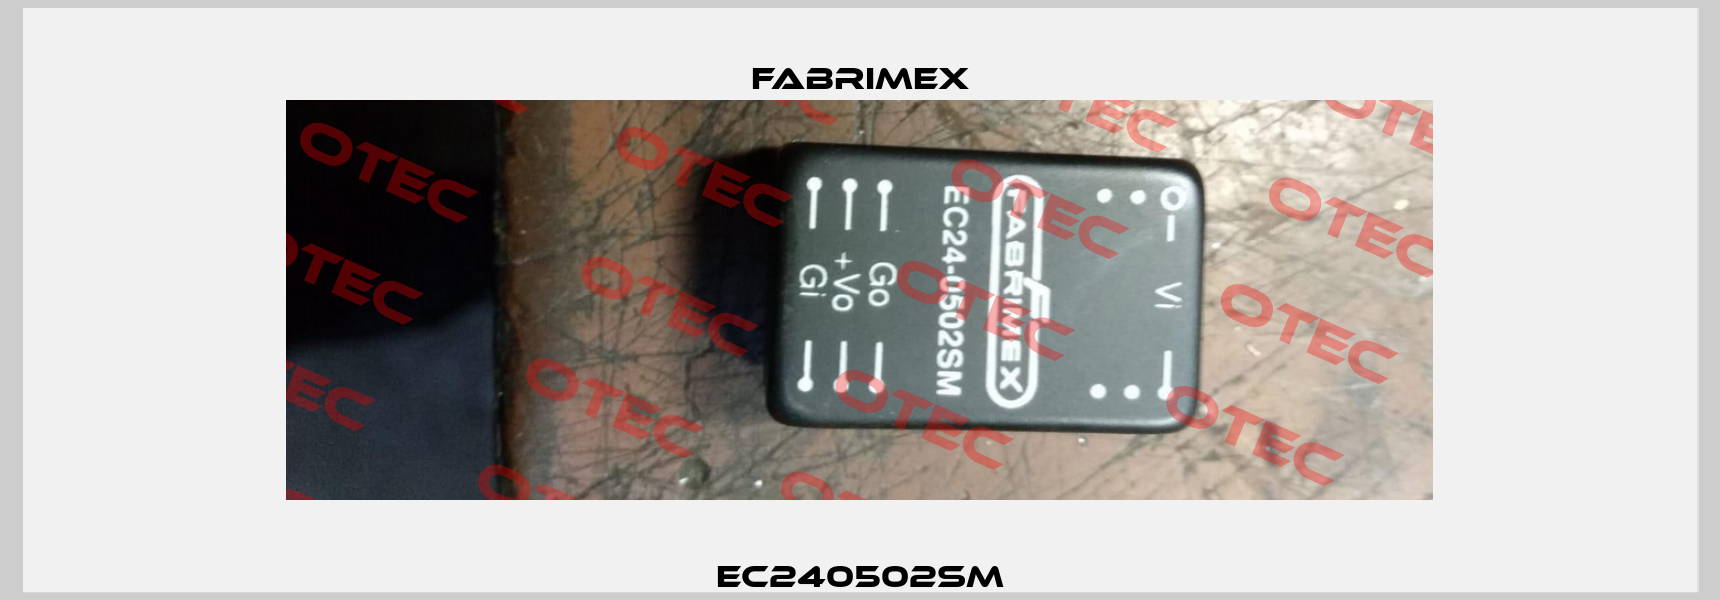 EC240502SM Fabrimex